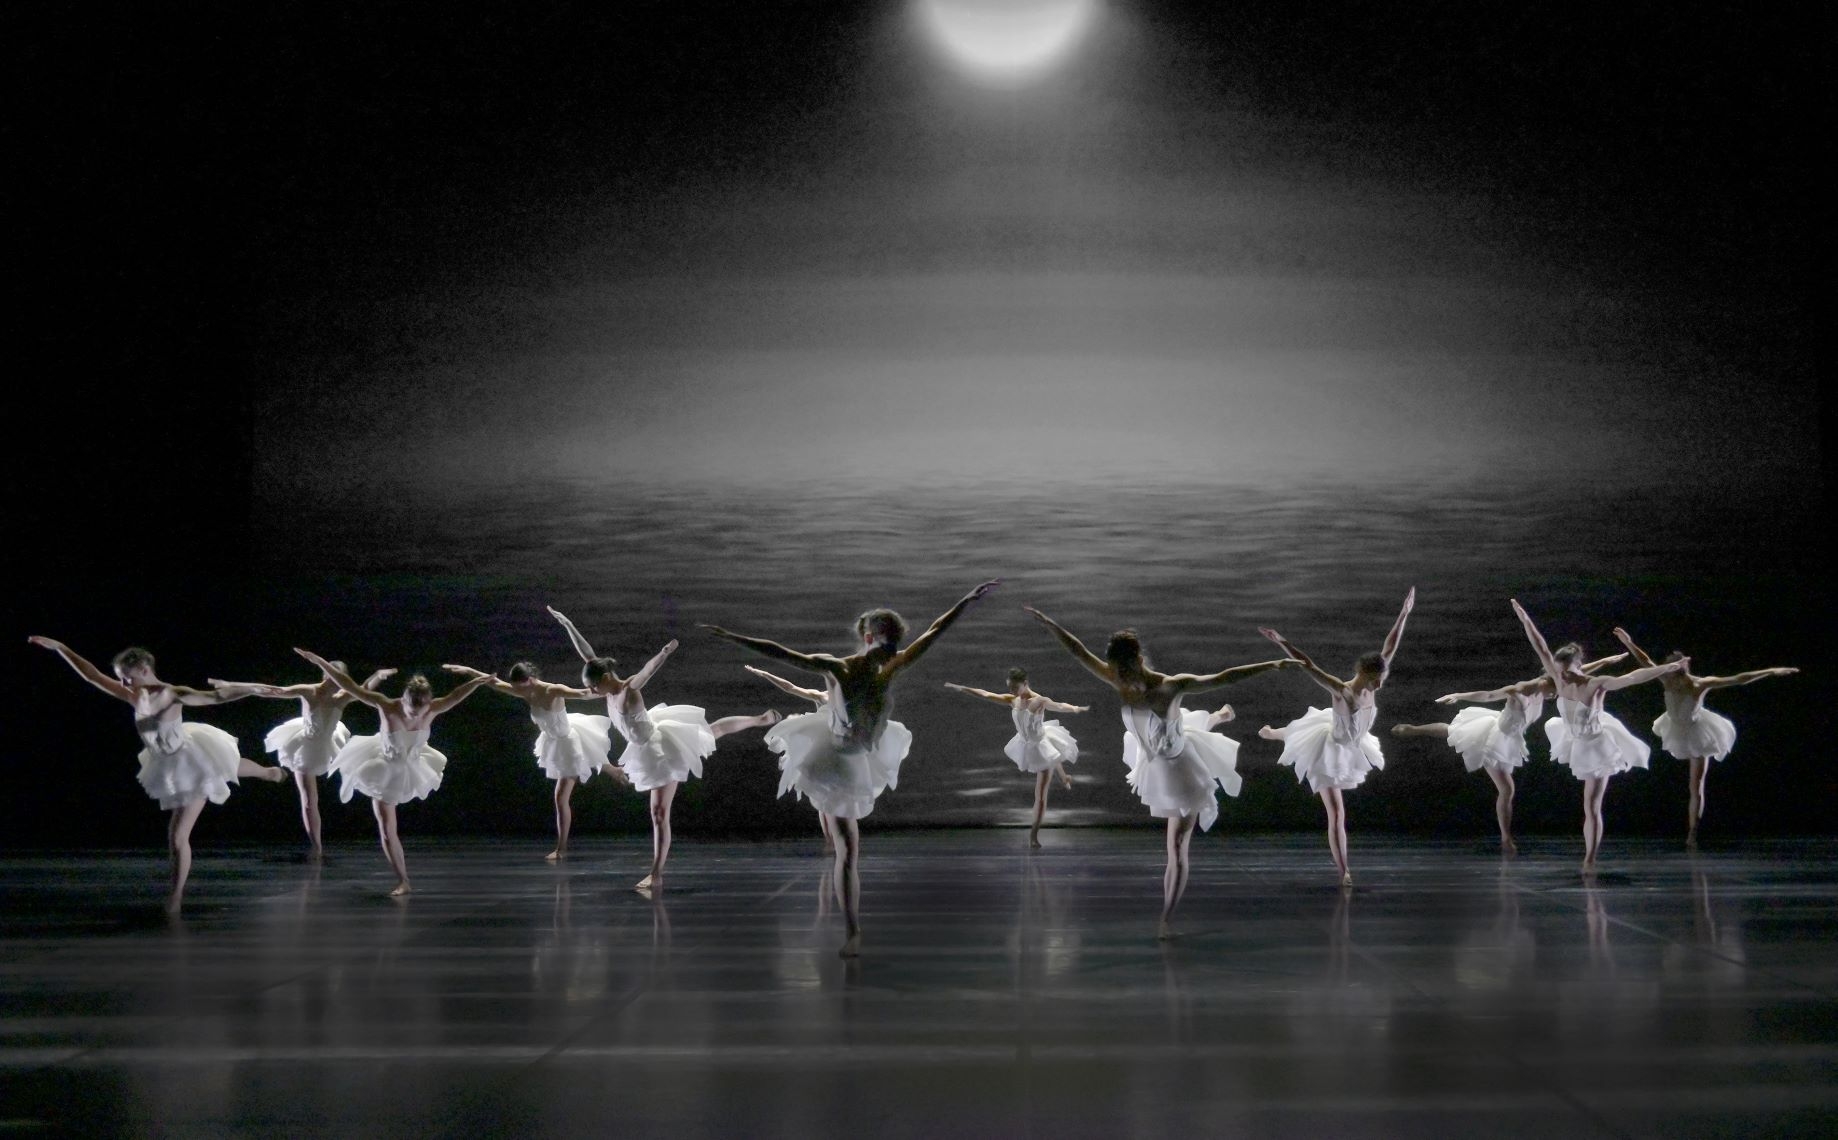 Ballet Preljocaj performs "Swan Lake" onstage.